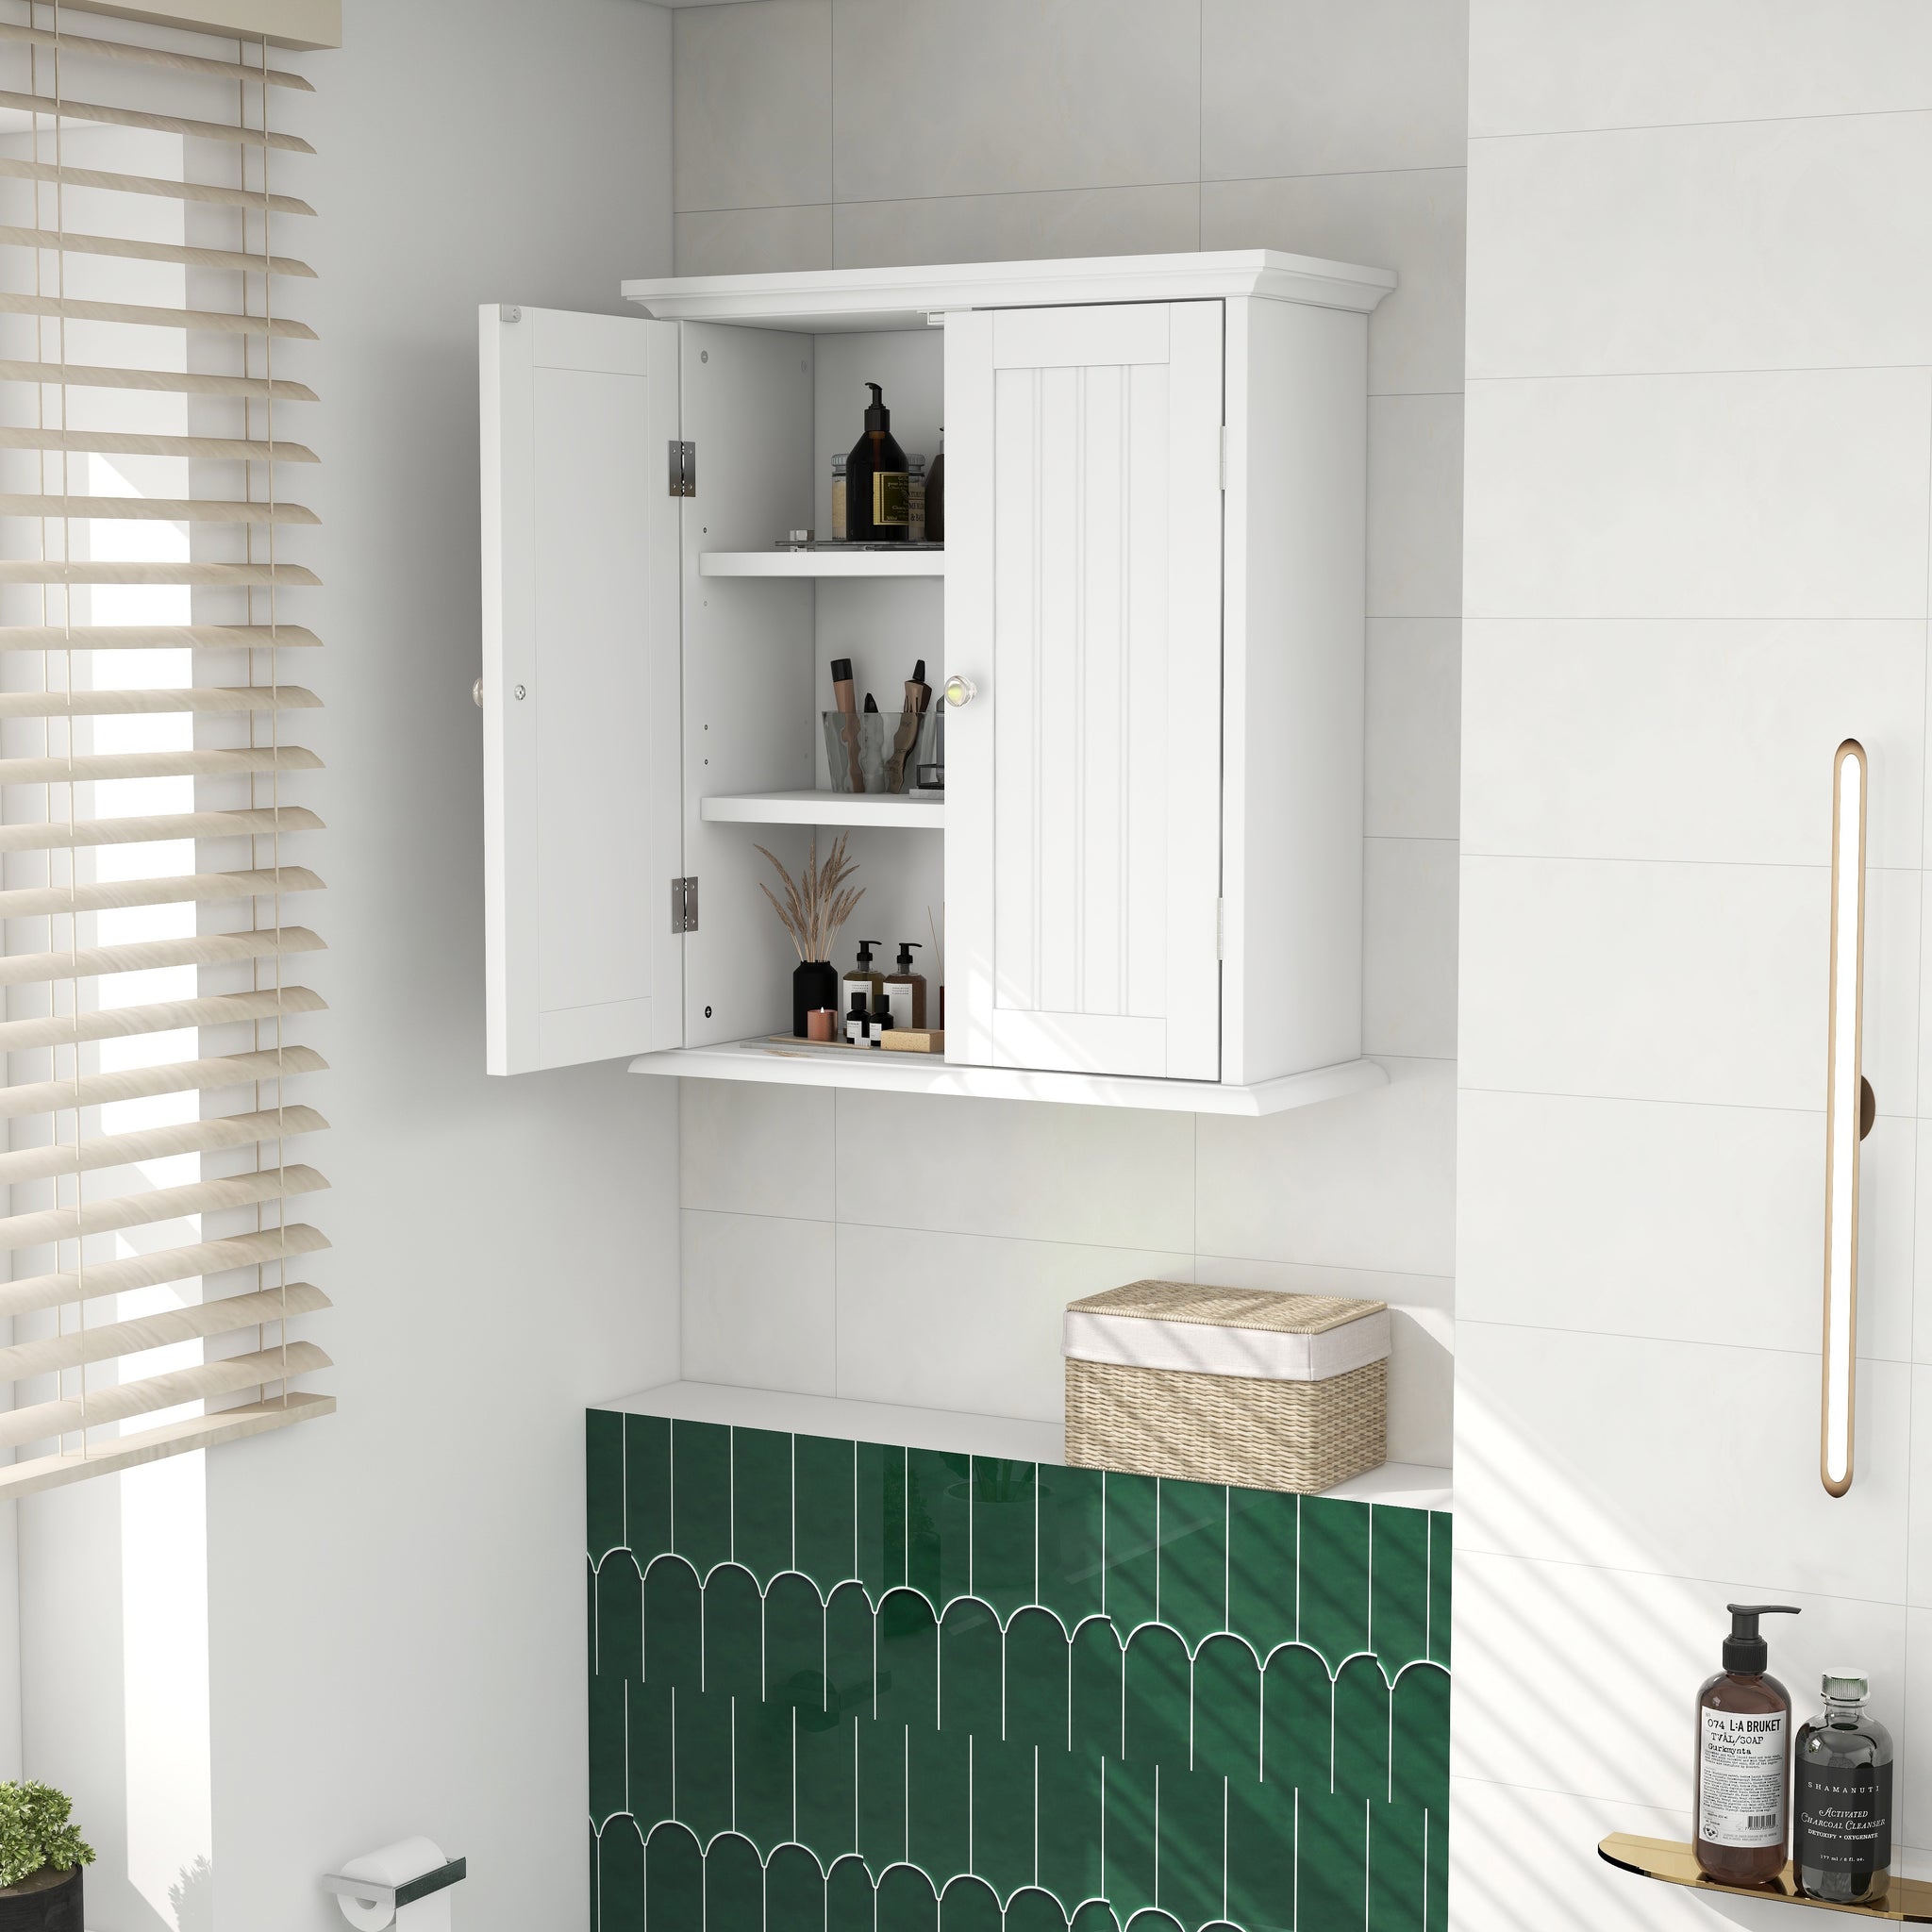 LOKO Bathroom Wall Cabinet, Bathroom Cabinet Wall Mounted with Single  Shutter Door and Adjustable Shelf, Small Medicine Cabinet for Living Room